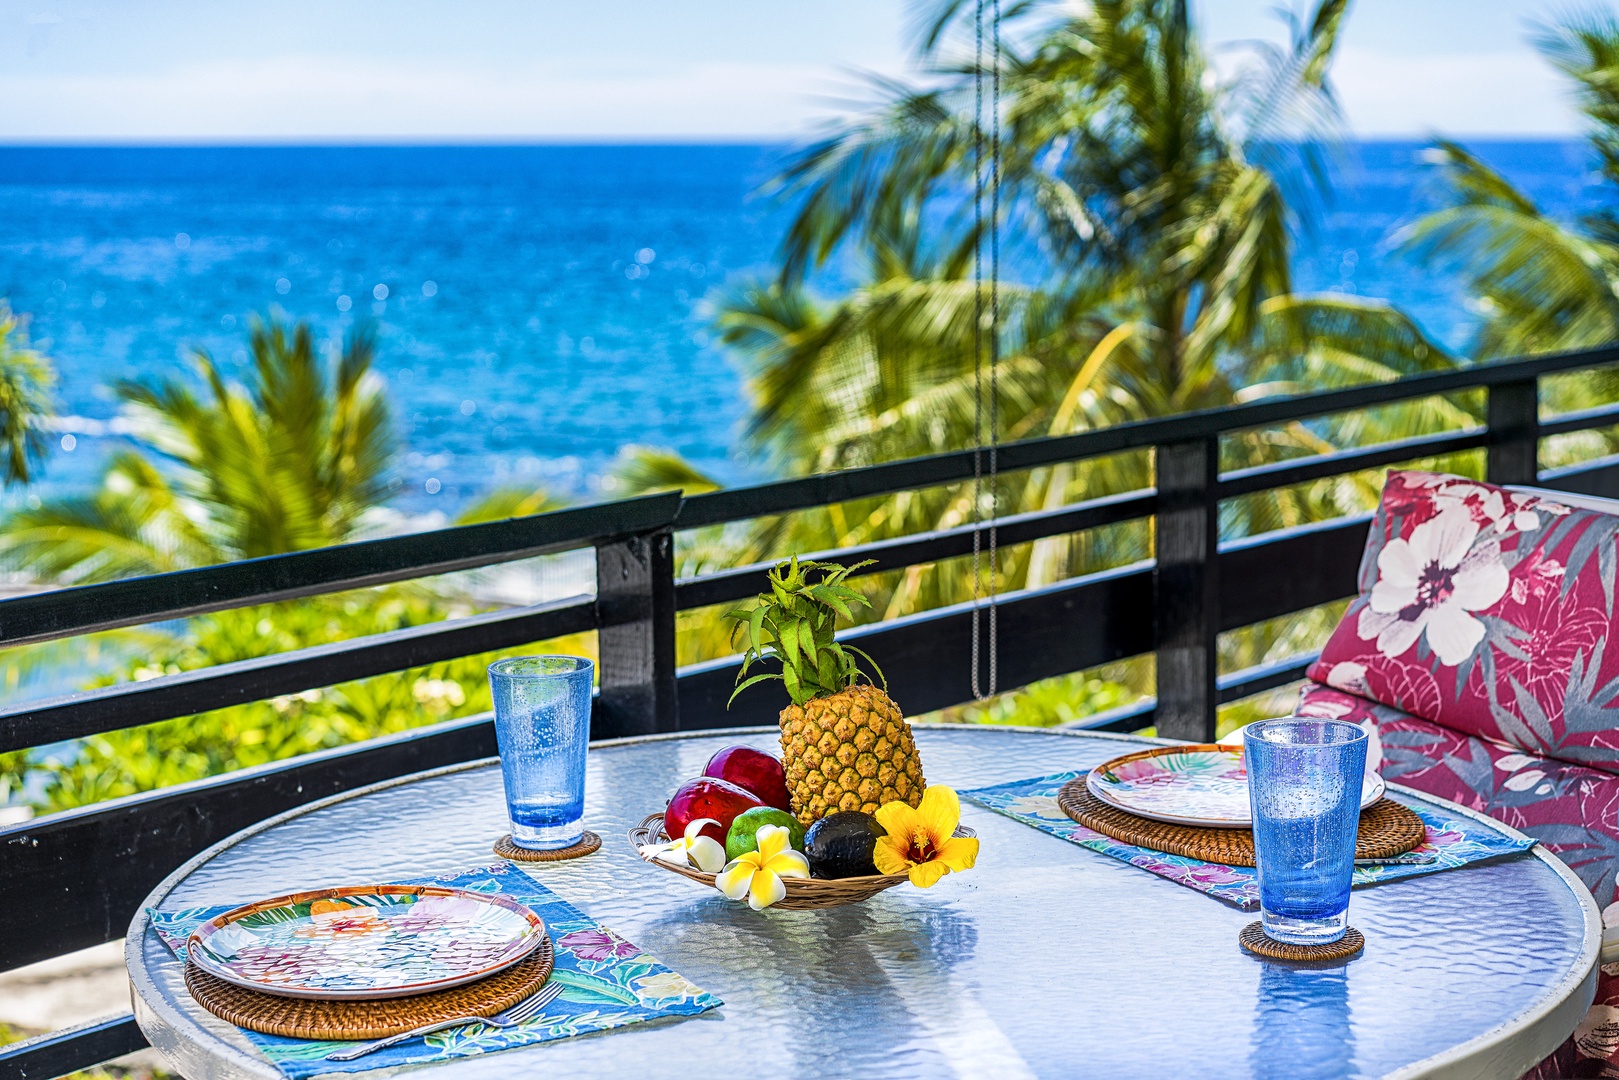 Kailua Kona Vacation Rentals, Casa De Emdeko 336 - Take in the view while enjoying coffee on the Lanai!